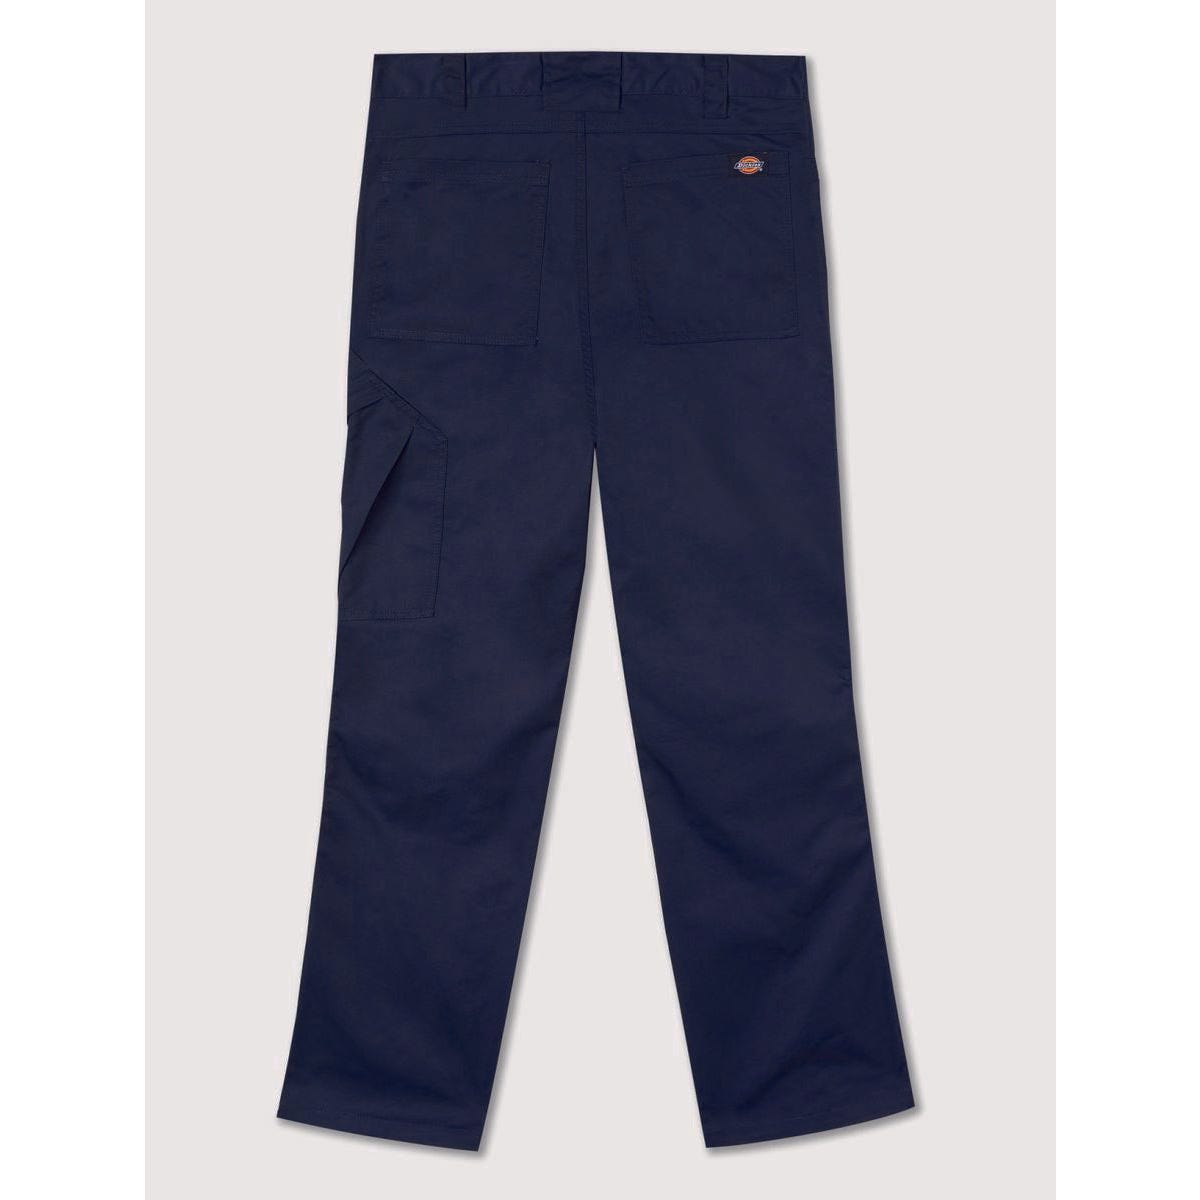 Pantalon de travail Action Flex bleu marine - Dickies - Taille 40 6